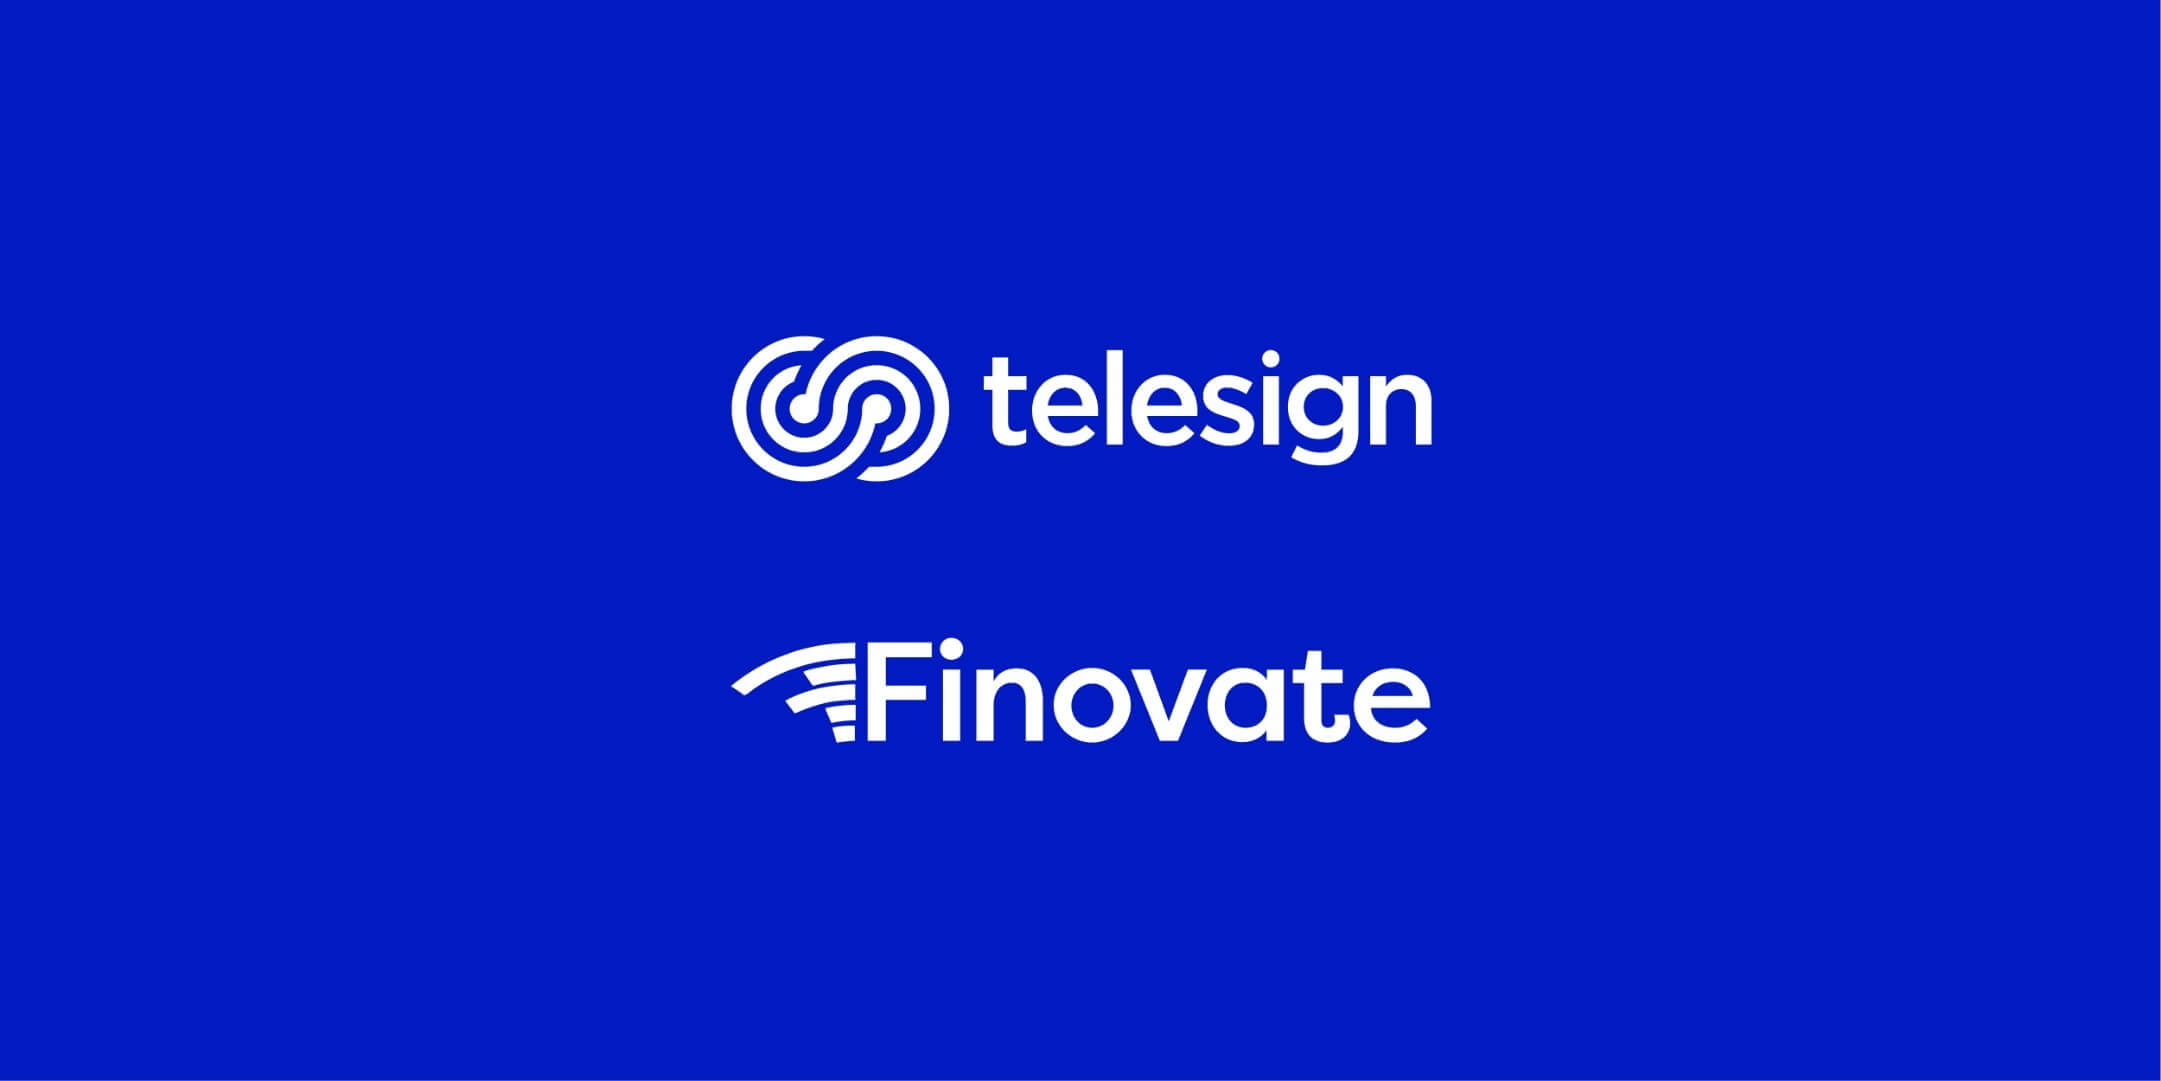 Telesign and Finovate logo lockup